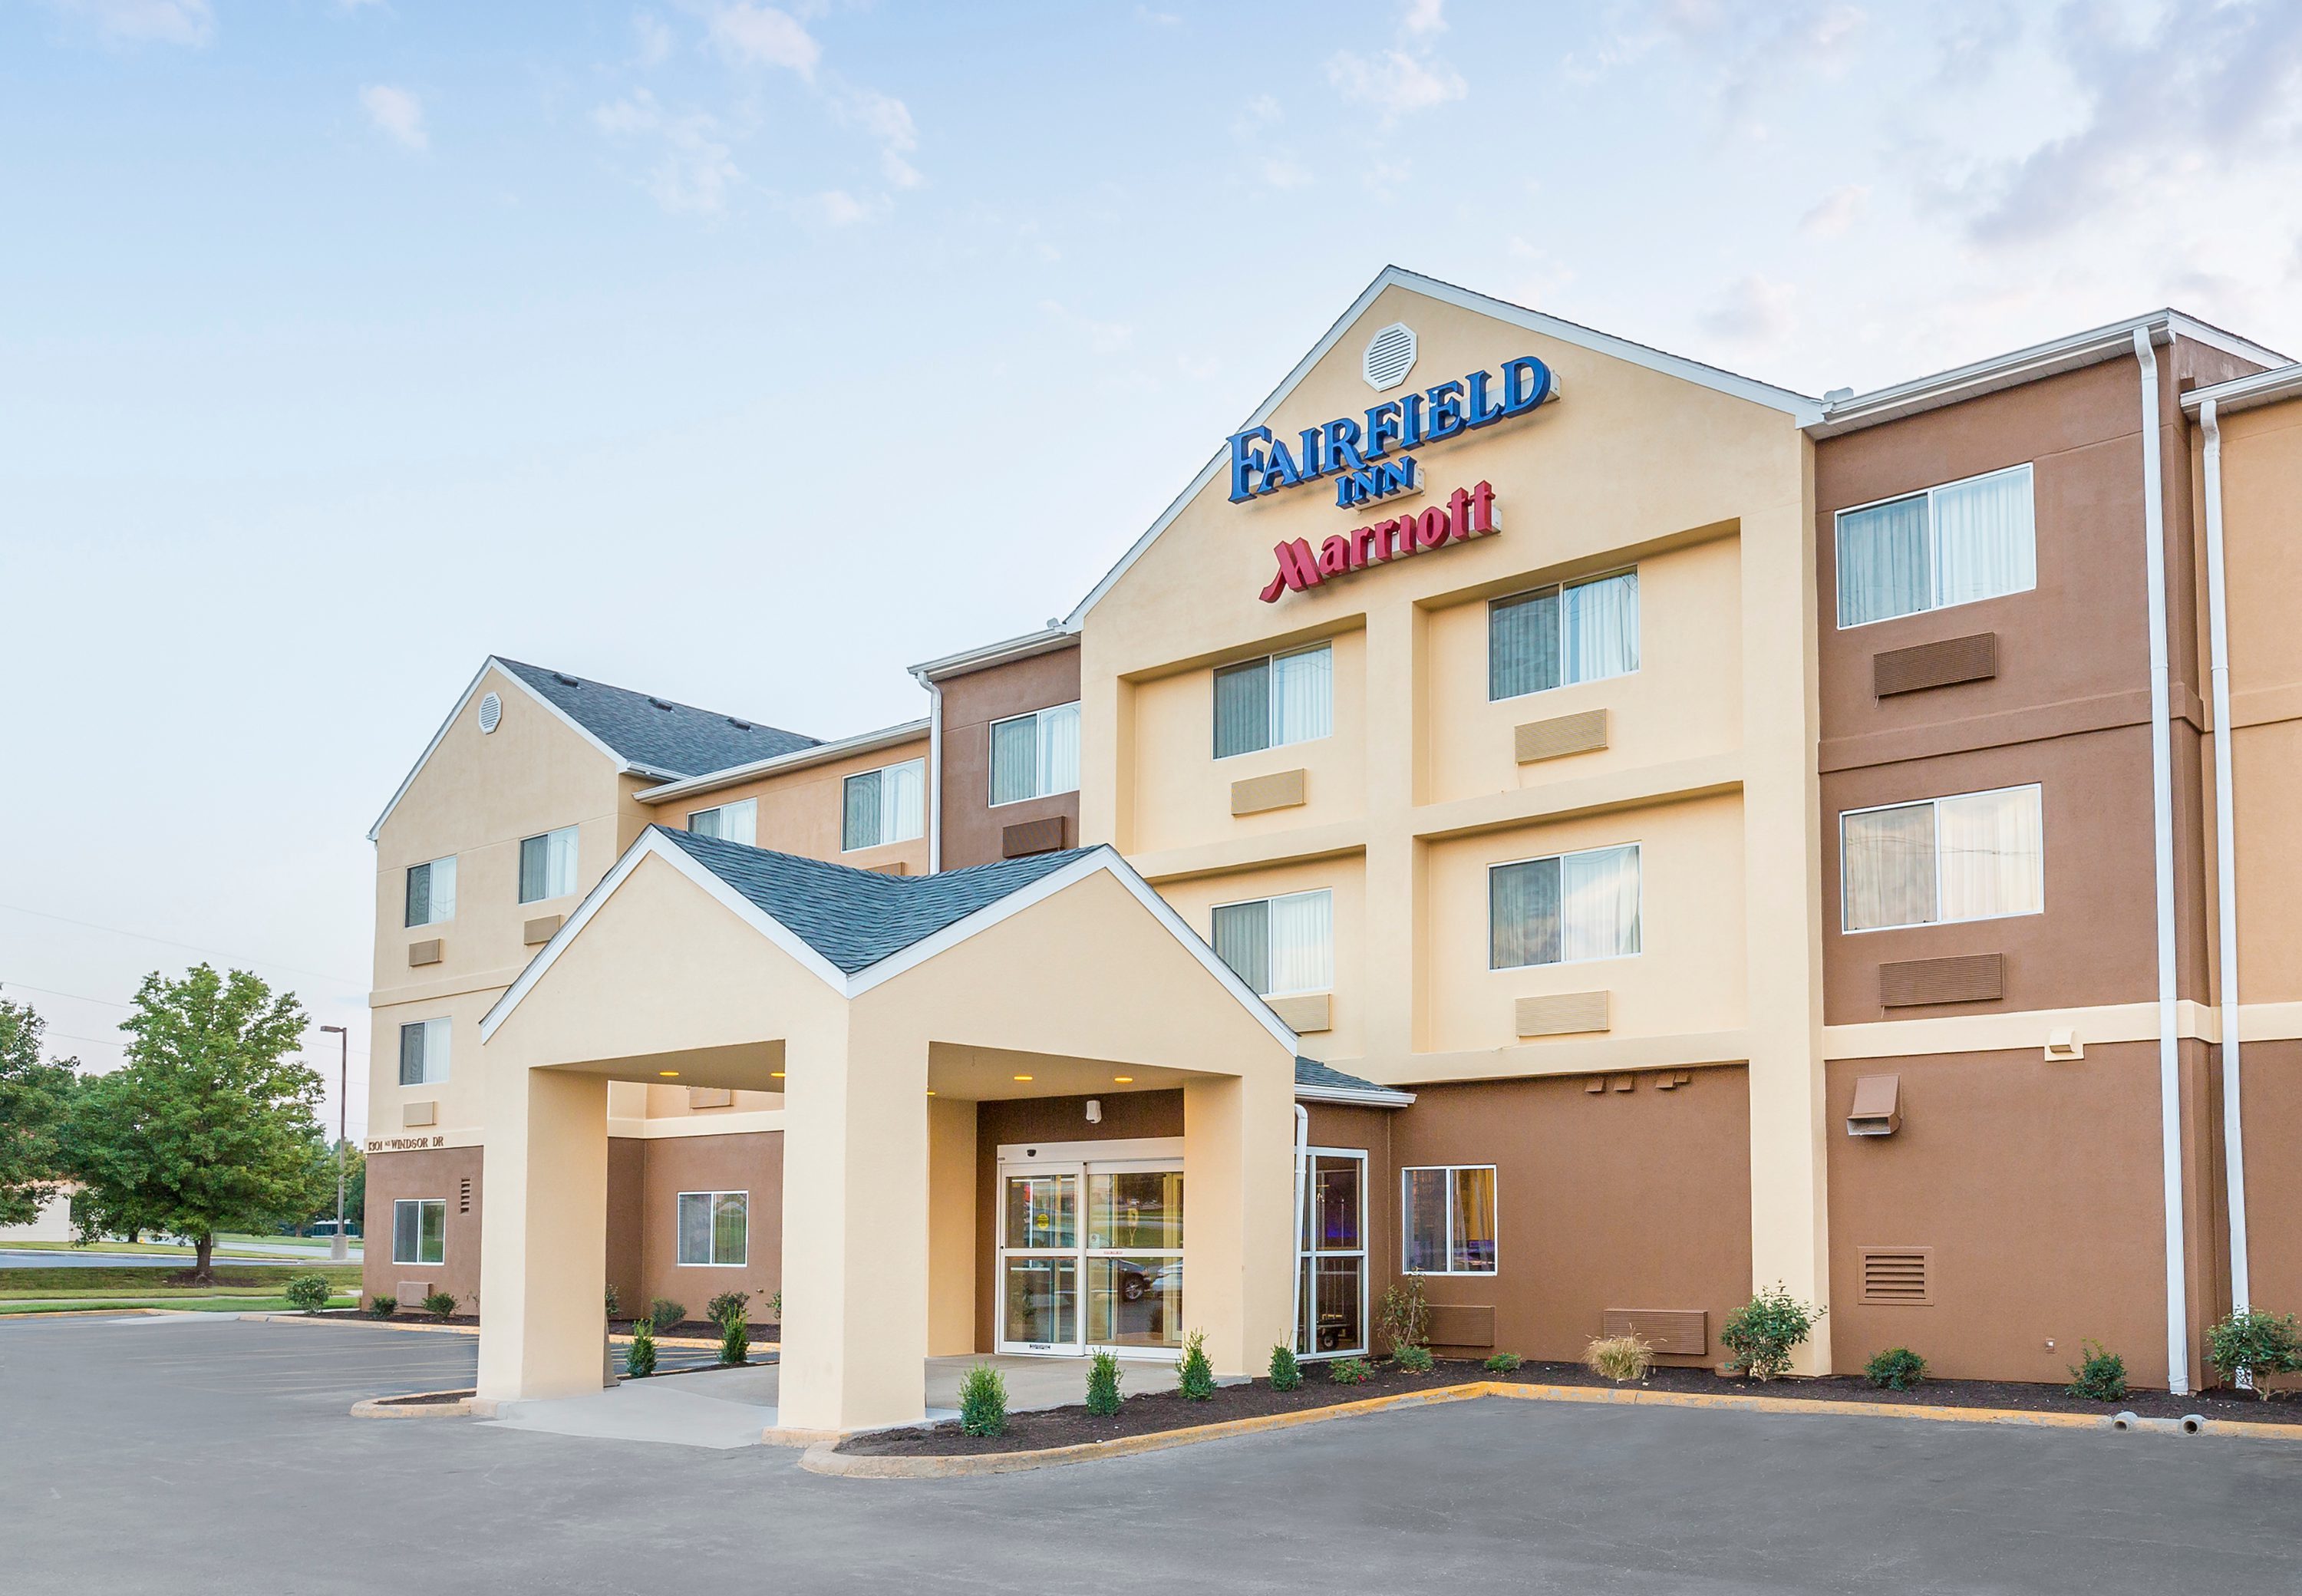 Photo of Fairfield Inn & Suites by Marriott Kansas City Lee's Summit, Lees Summit, MO